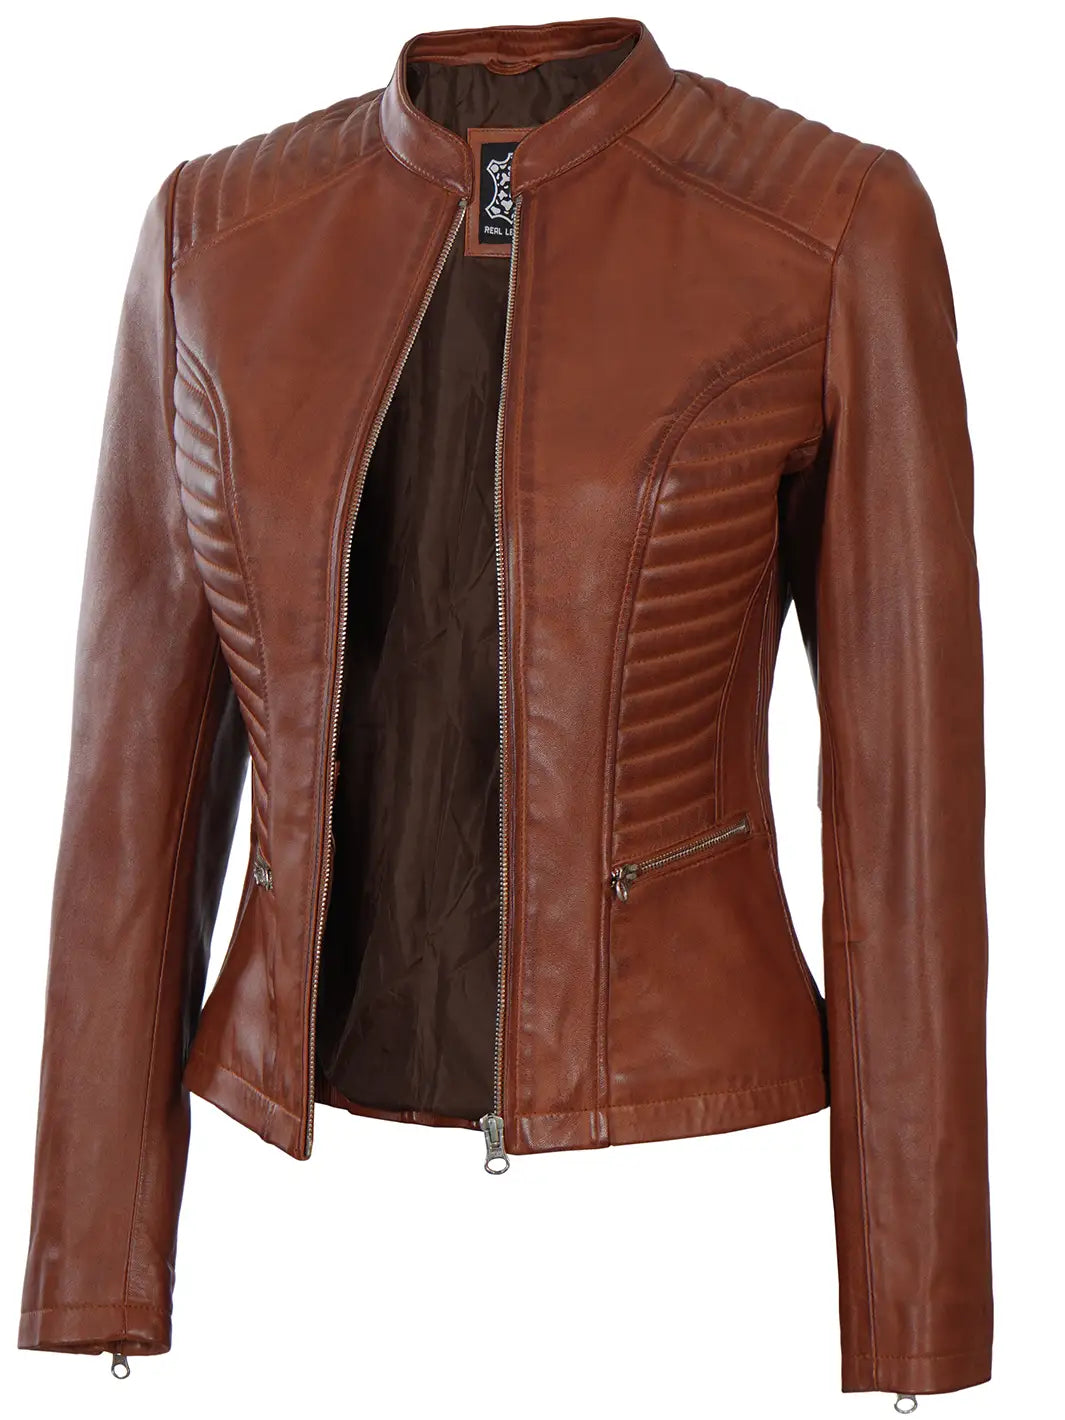 Moto leather jacket for women